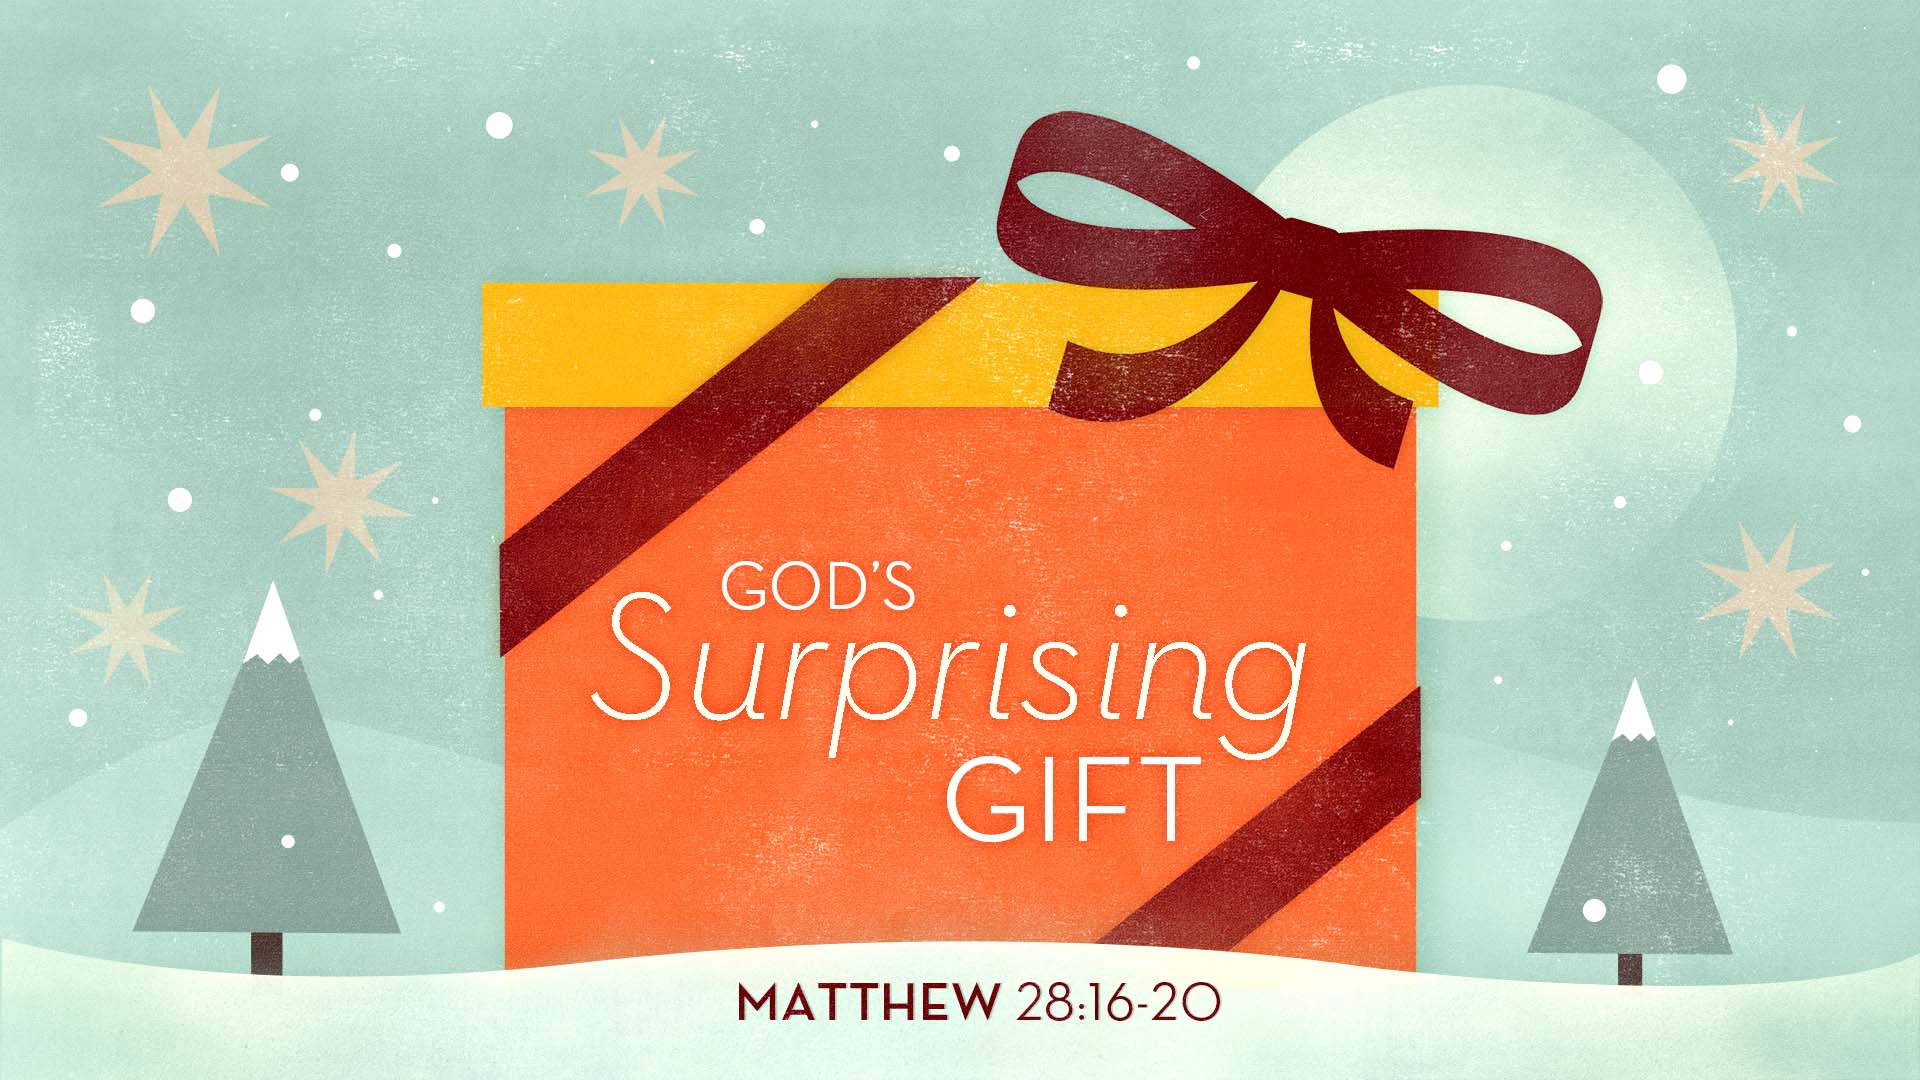 God's Surprising Gift Image